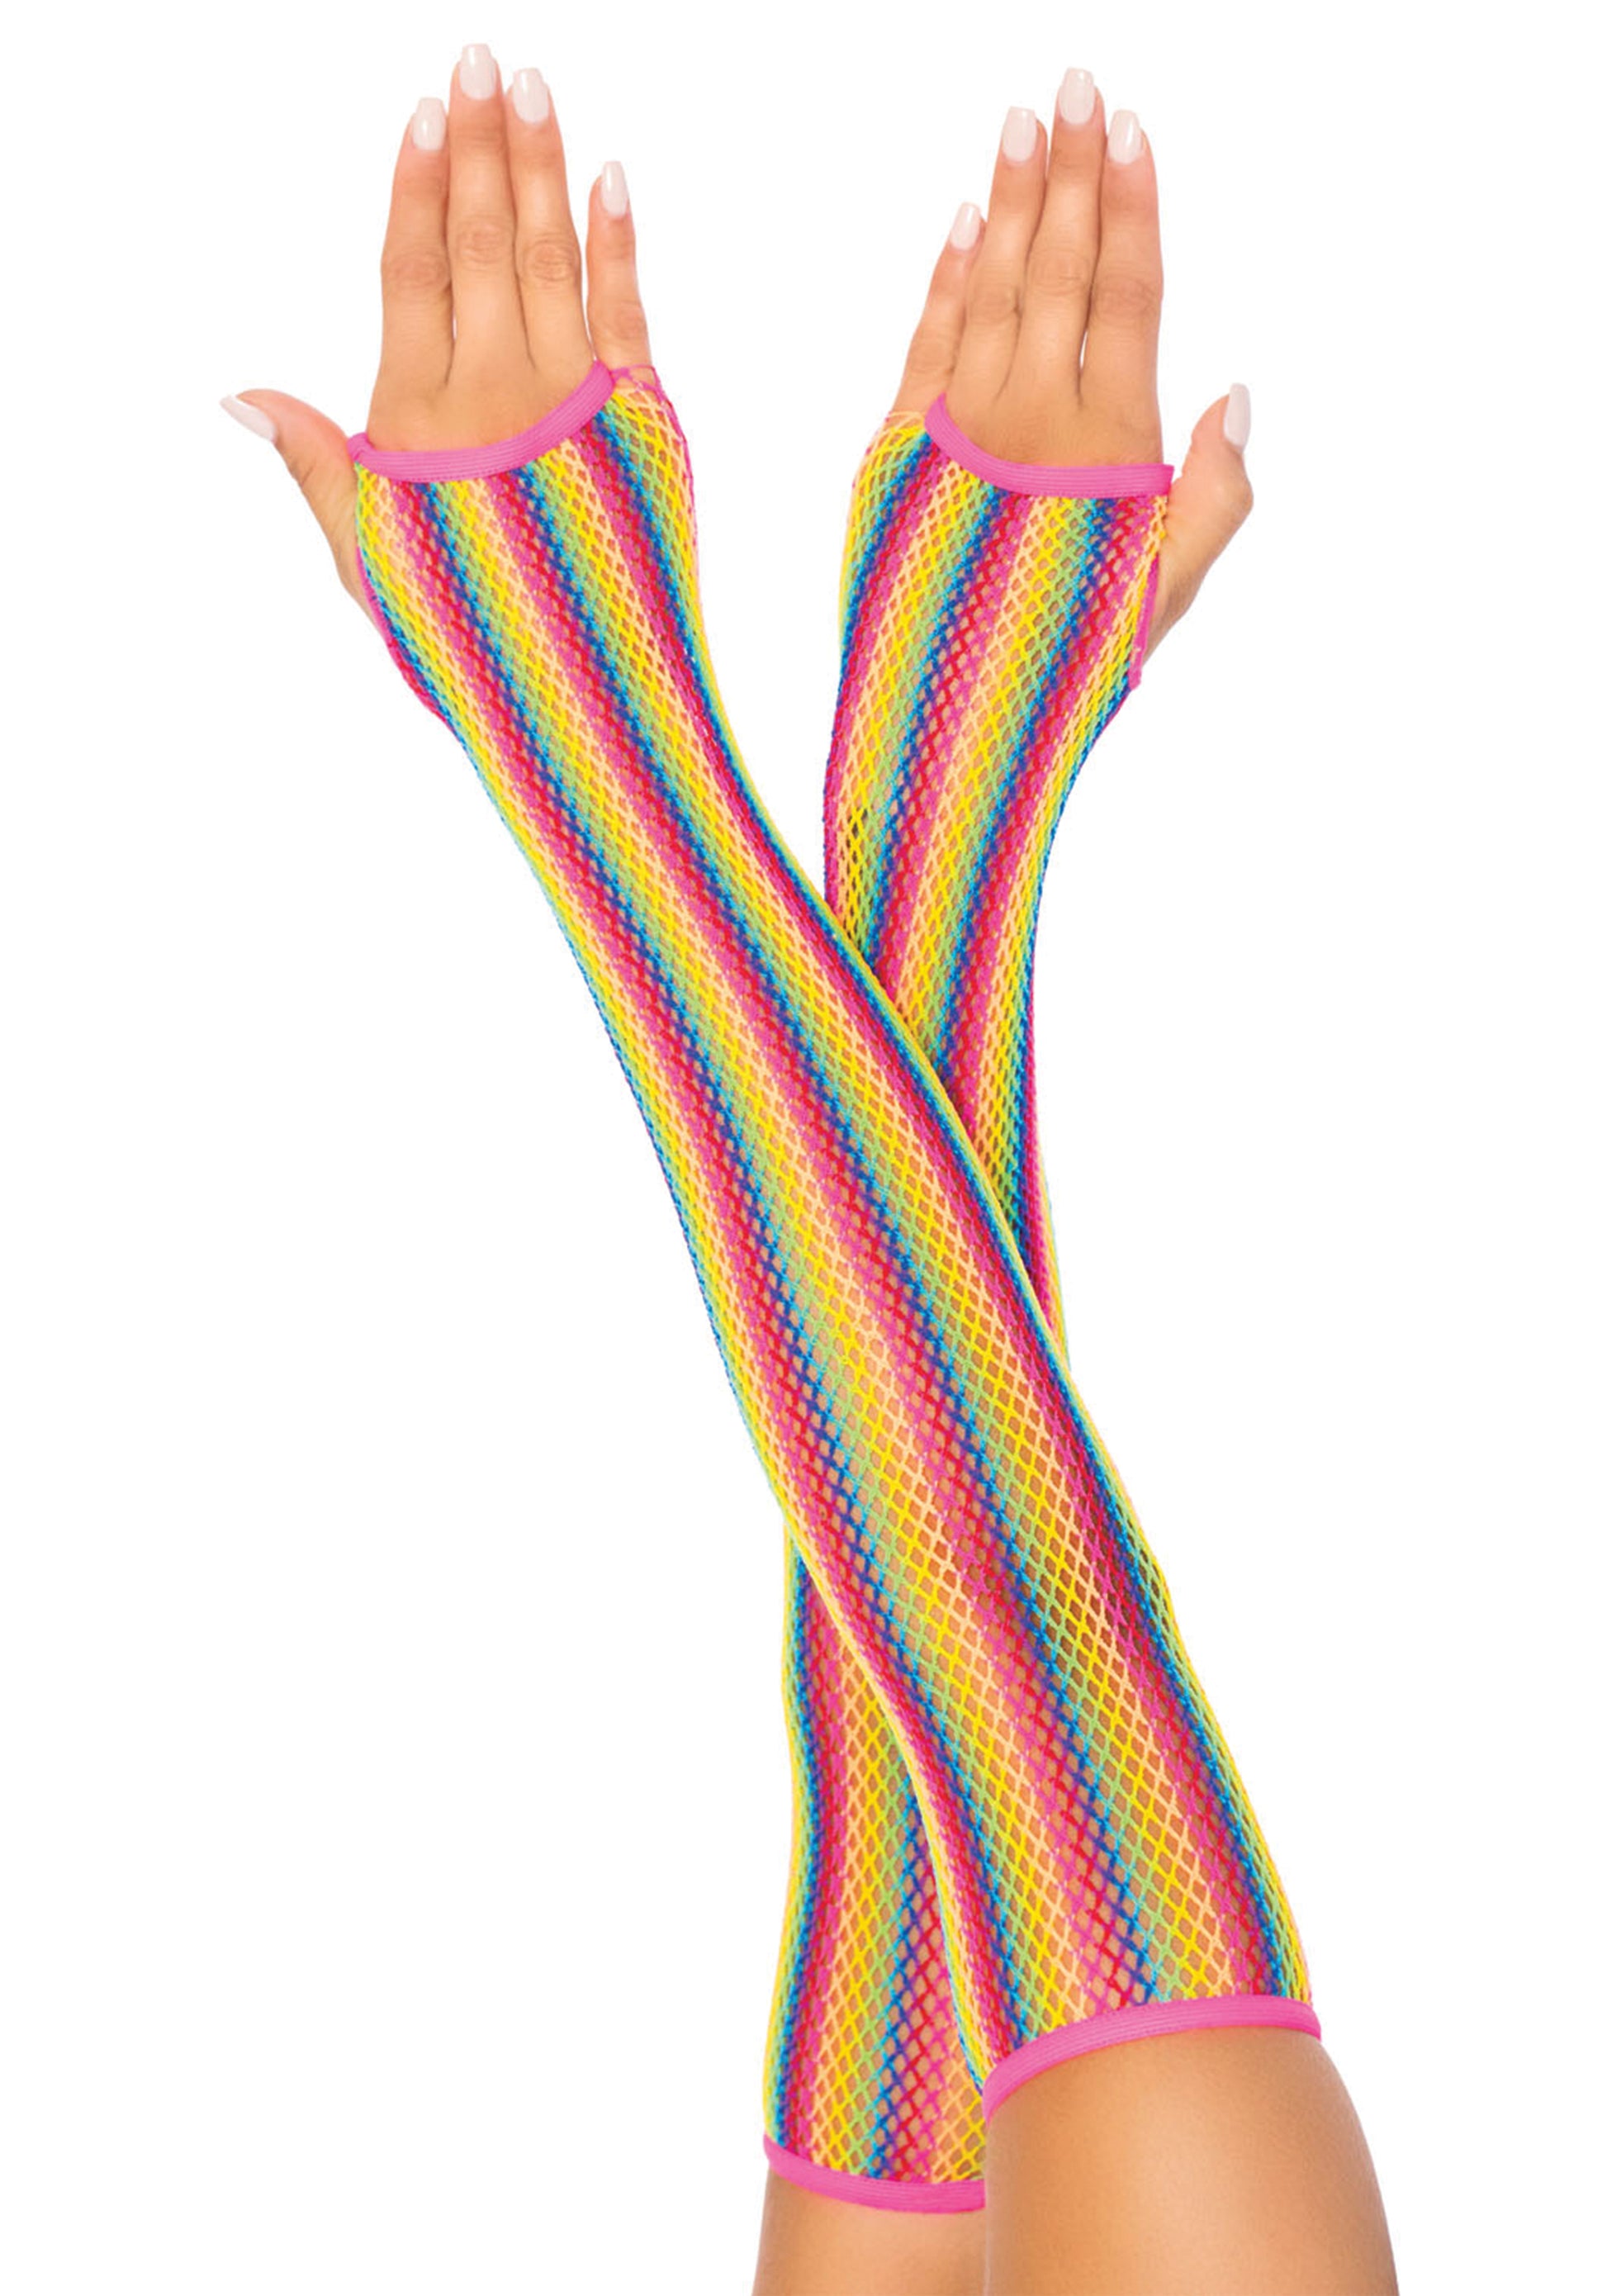 Leg Avenue 2036 Rainbow Arm Warmers - Multicoloured striped fishnet fingerless long over the elbow gloves.